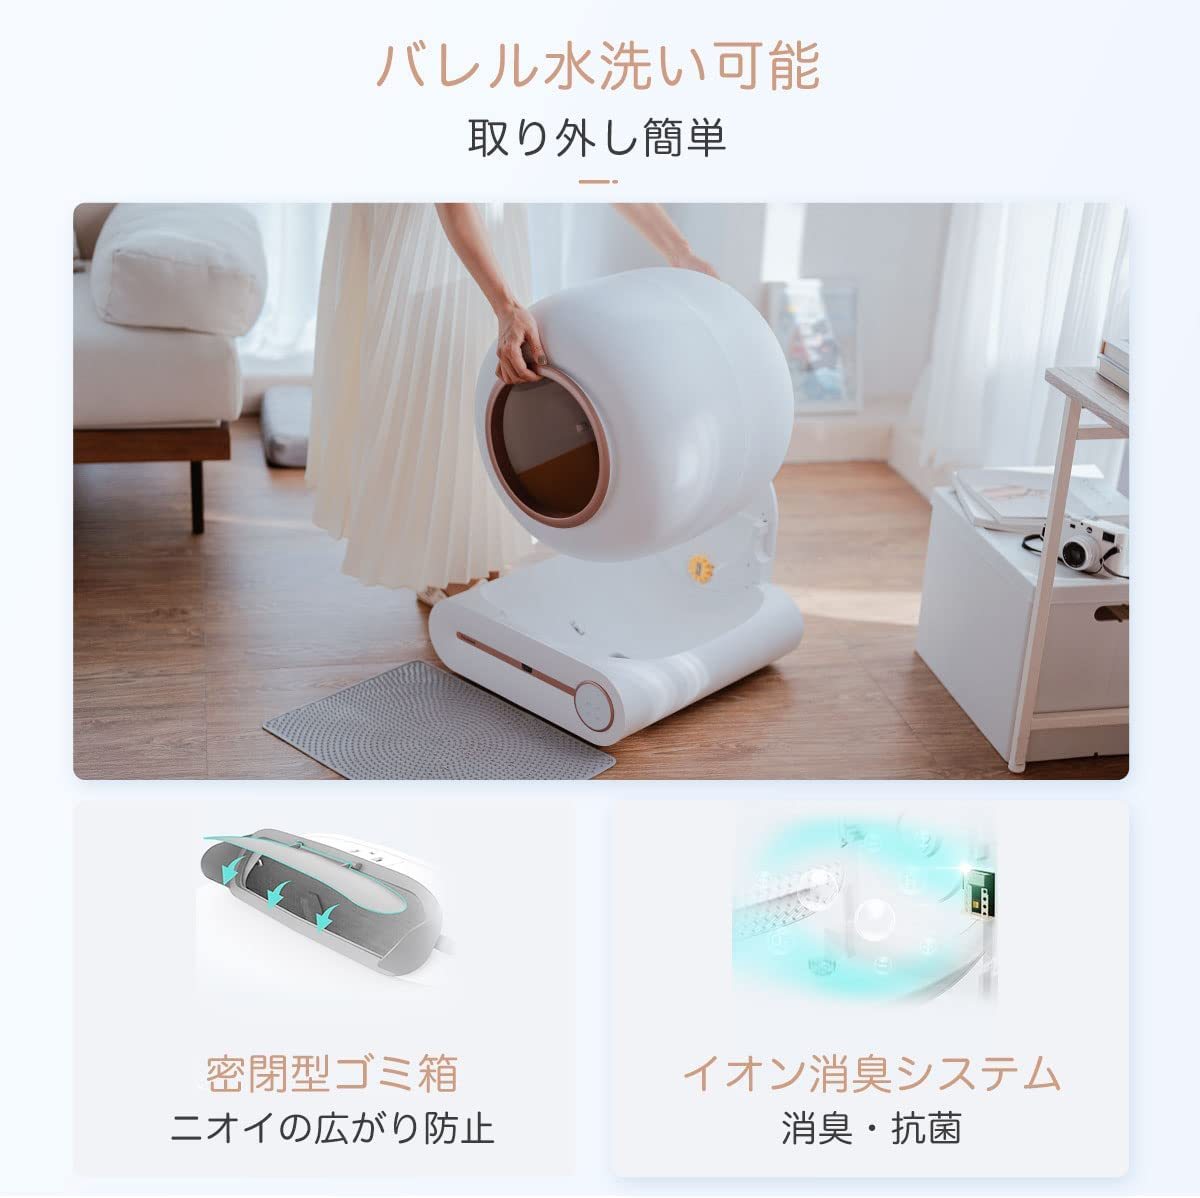 Pandaloli 猫 自動トイレ 大型：スマホ管理 センサー付き 自動掃除 定期清掃 IOS/Android対応 日本語説明書付 ホワイト